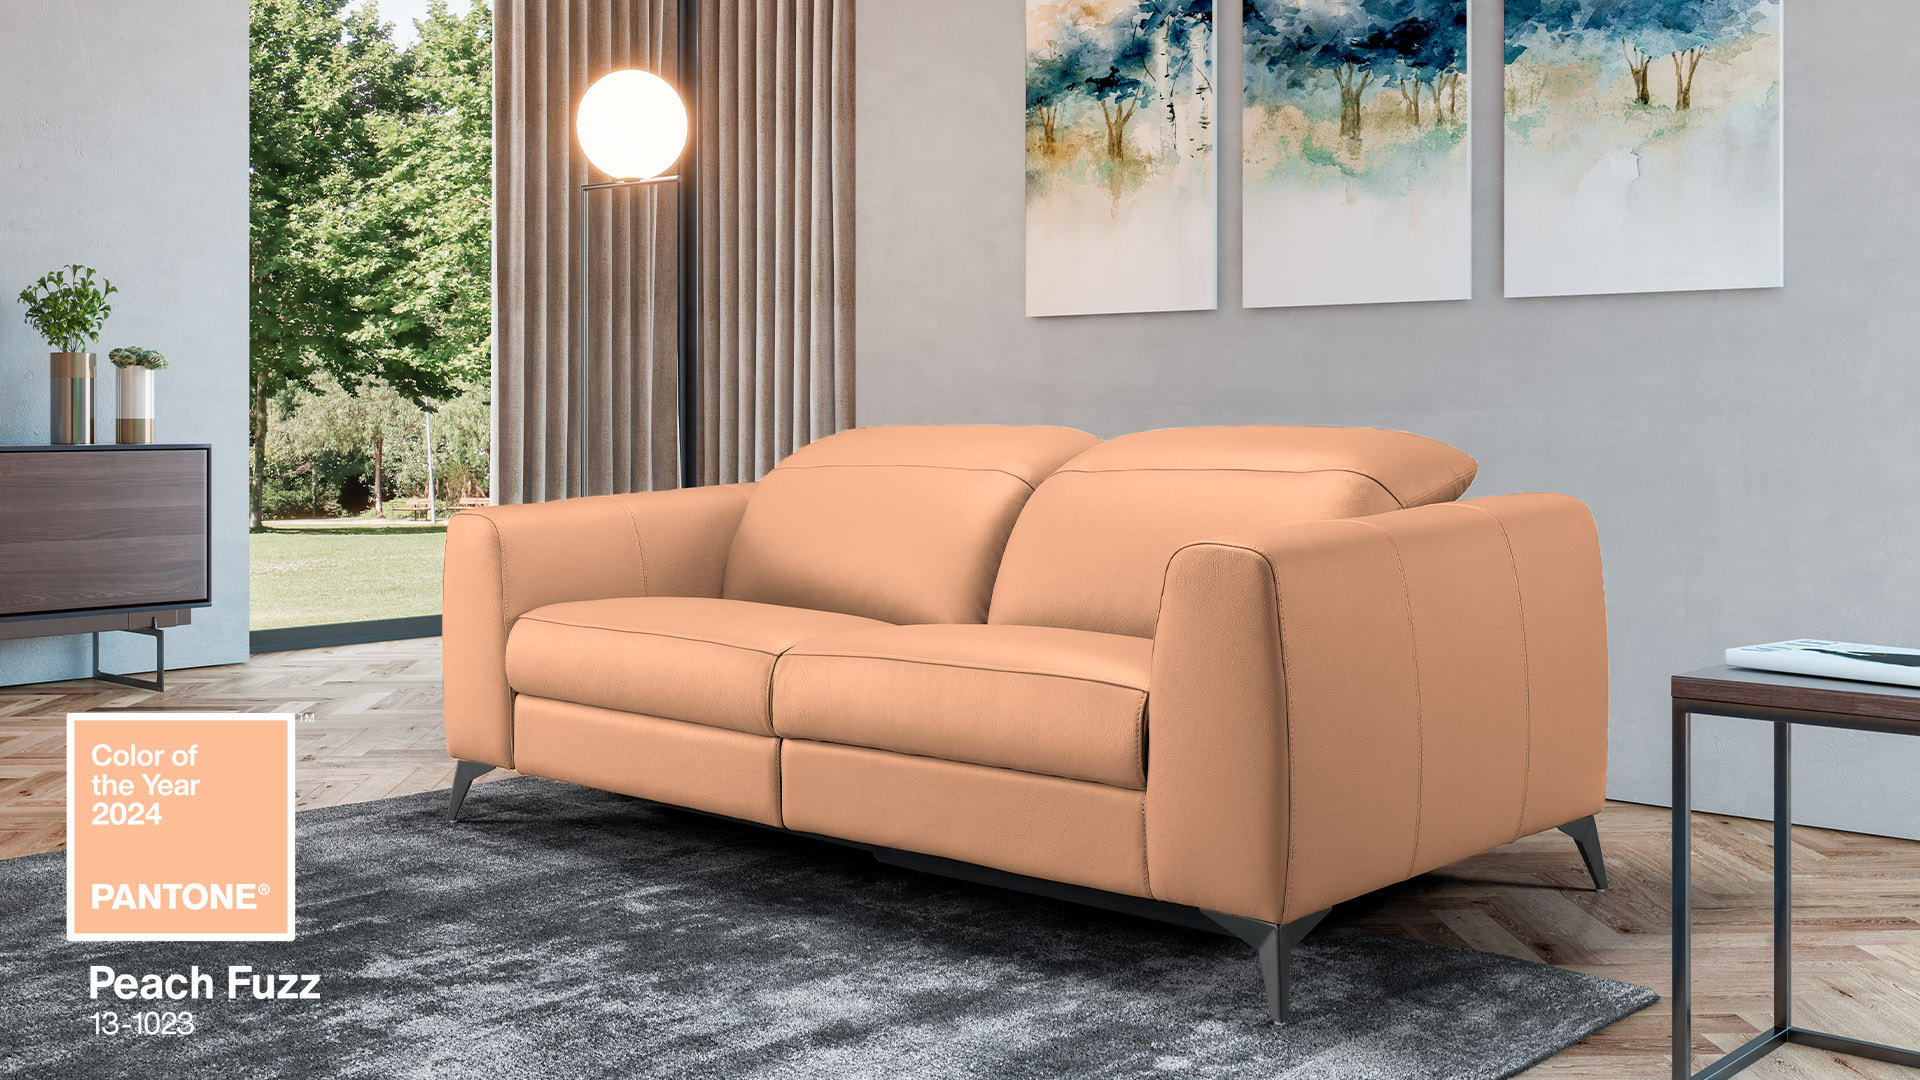 Soft peach-coloured sofa. In the bottom corner you can see Pantone's Peach Fuzz colour choice for 2024.